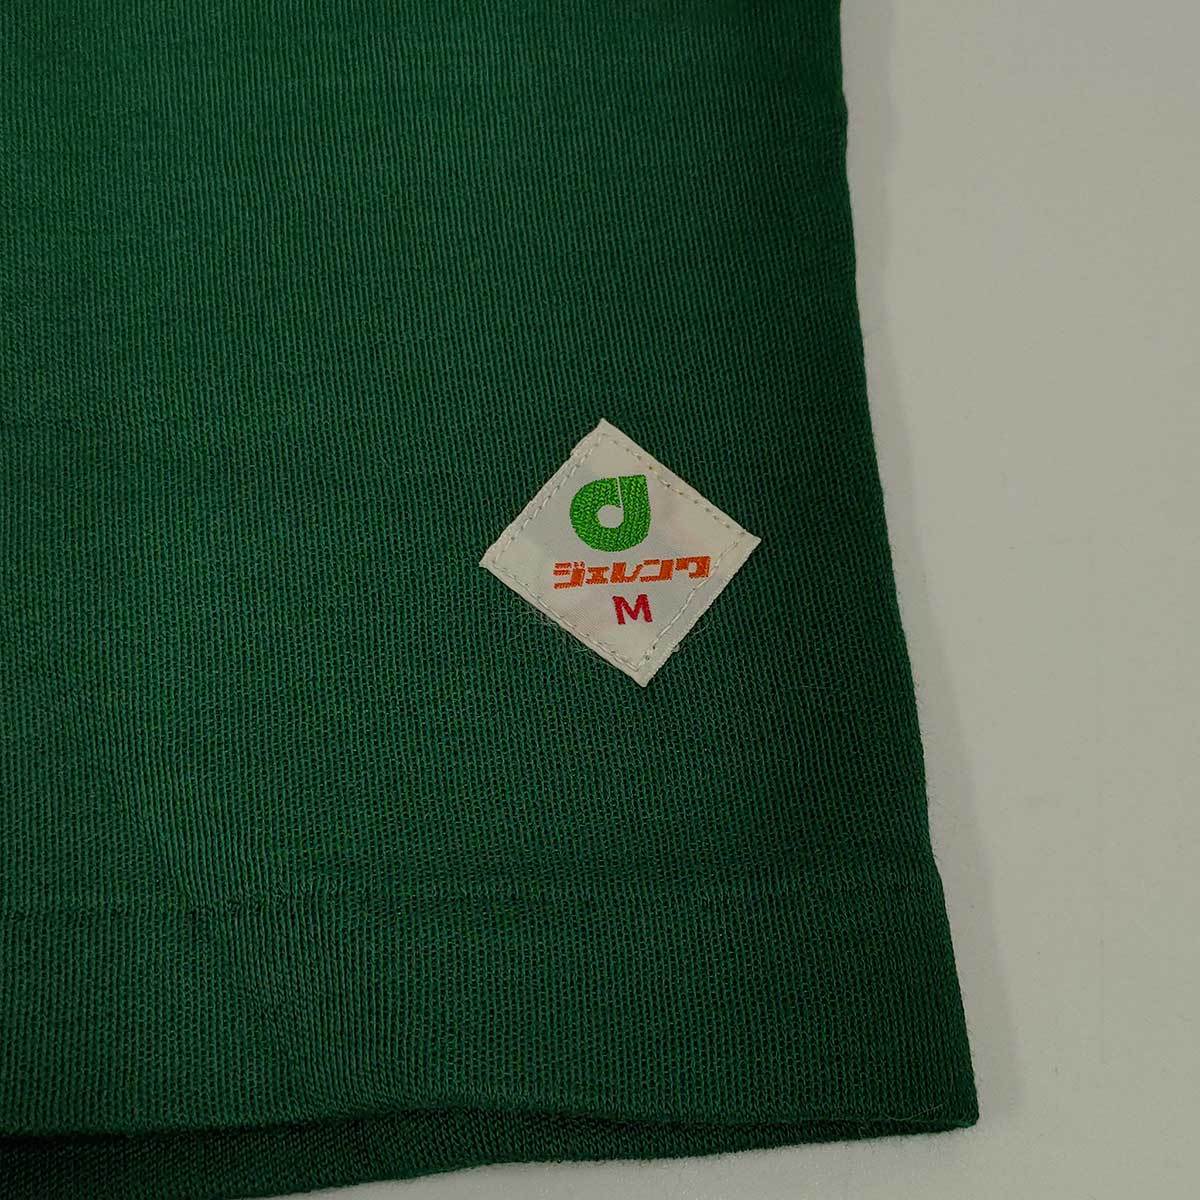 [ used ] Asics je Len k running shirt M green unisex jersey retro tank top 